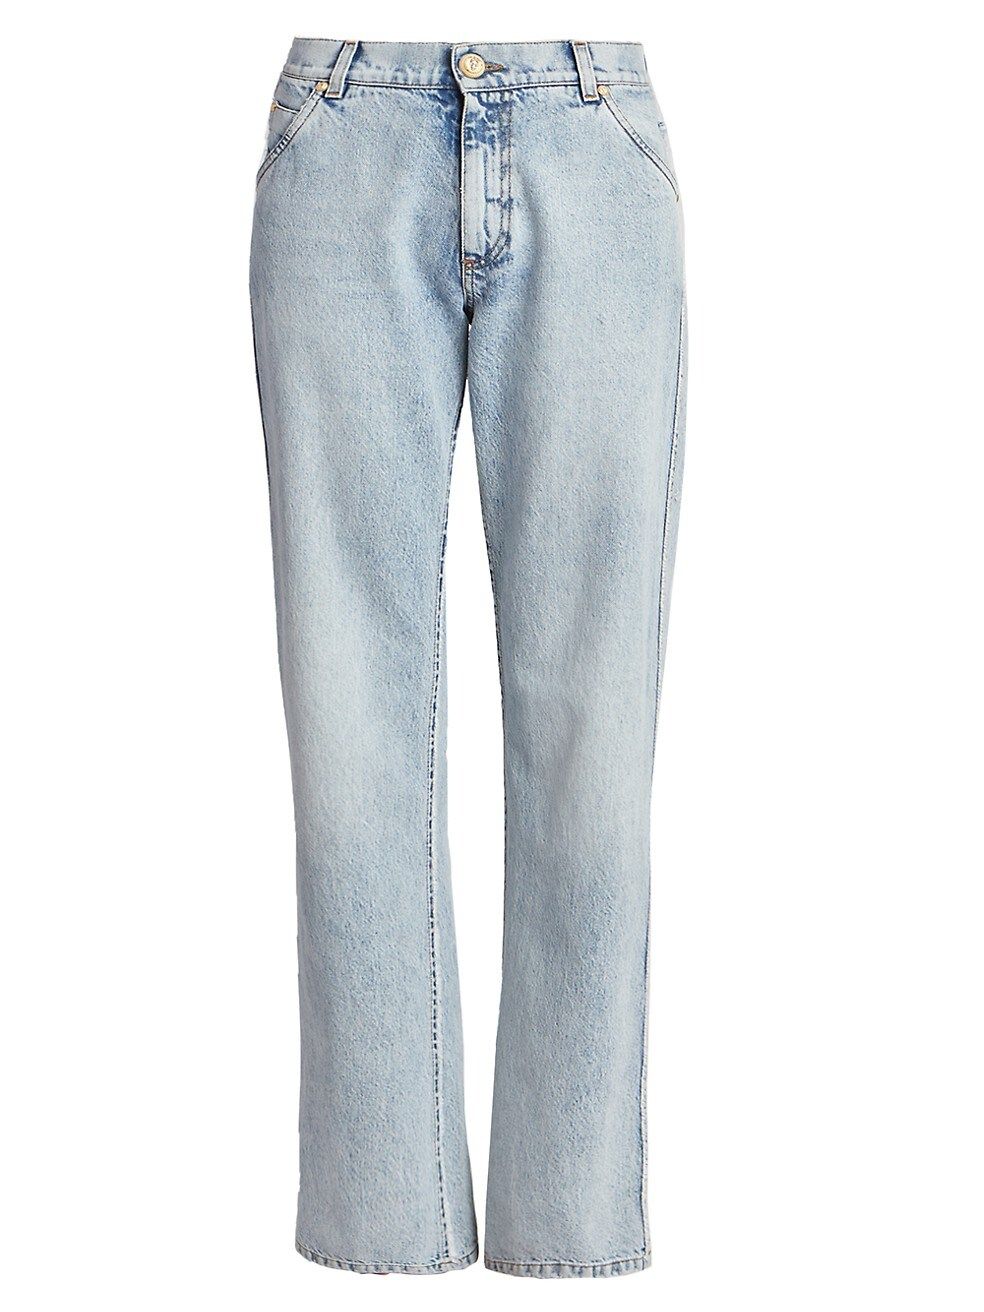 Balmain Vintage-Inspired Straight-Leg Jeans | Saks Fifth Avenue